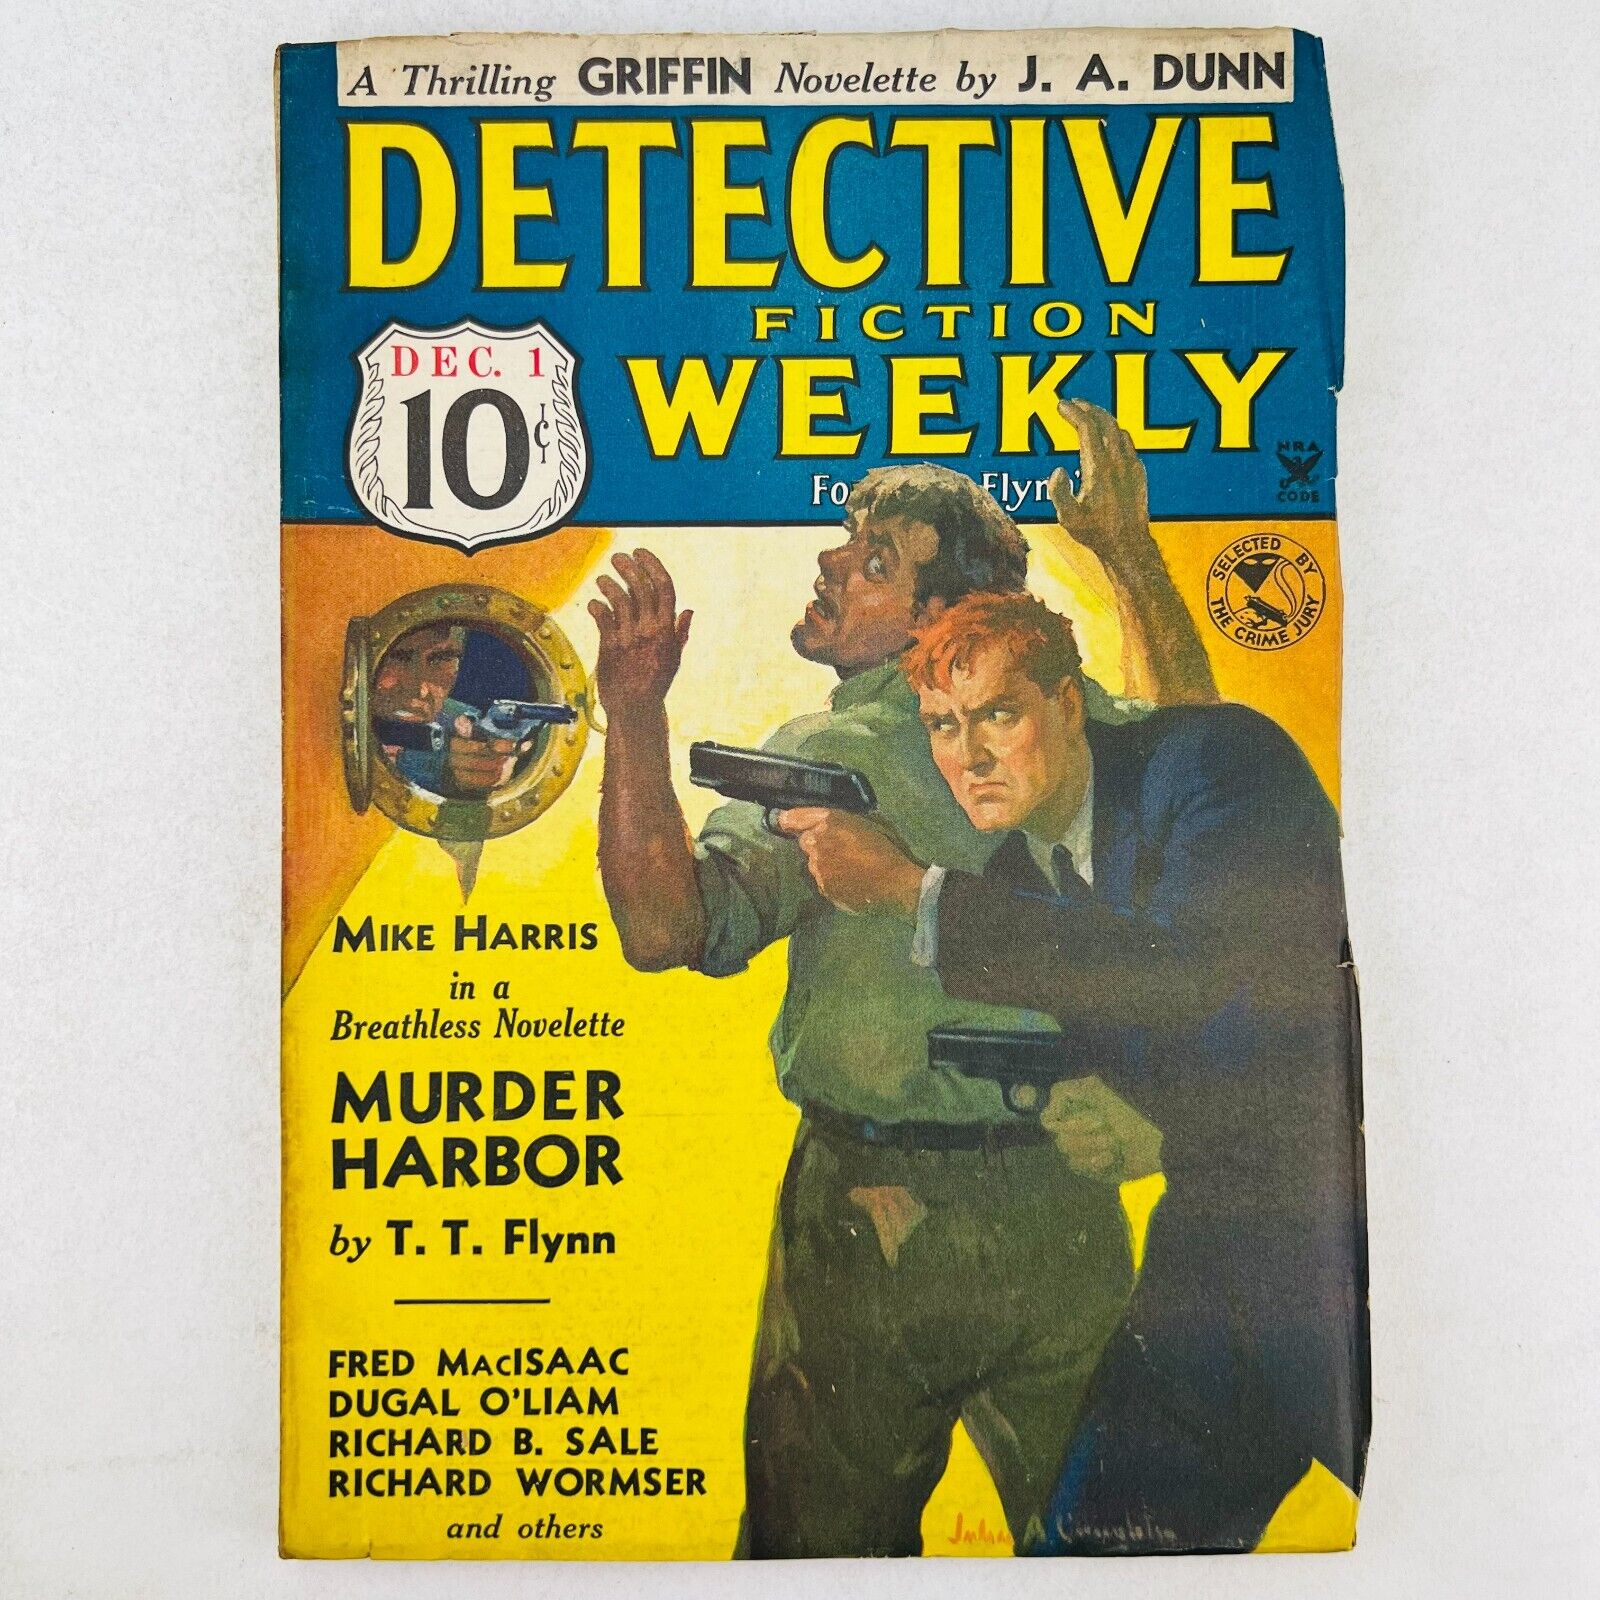 RARE PULP  DETECTIVE FICTION WEEKLY - 1934 DEC 1 - MURDER HARBOUR  - FINE